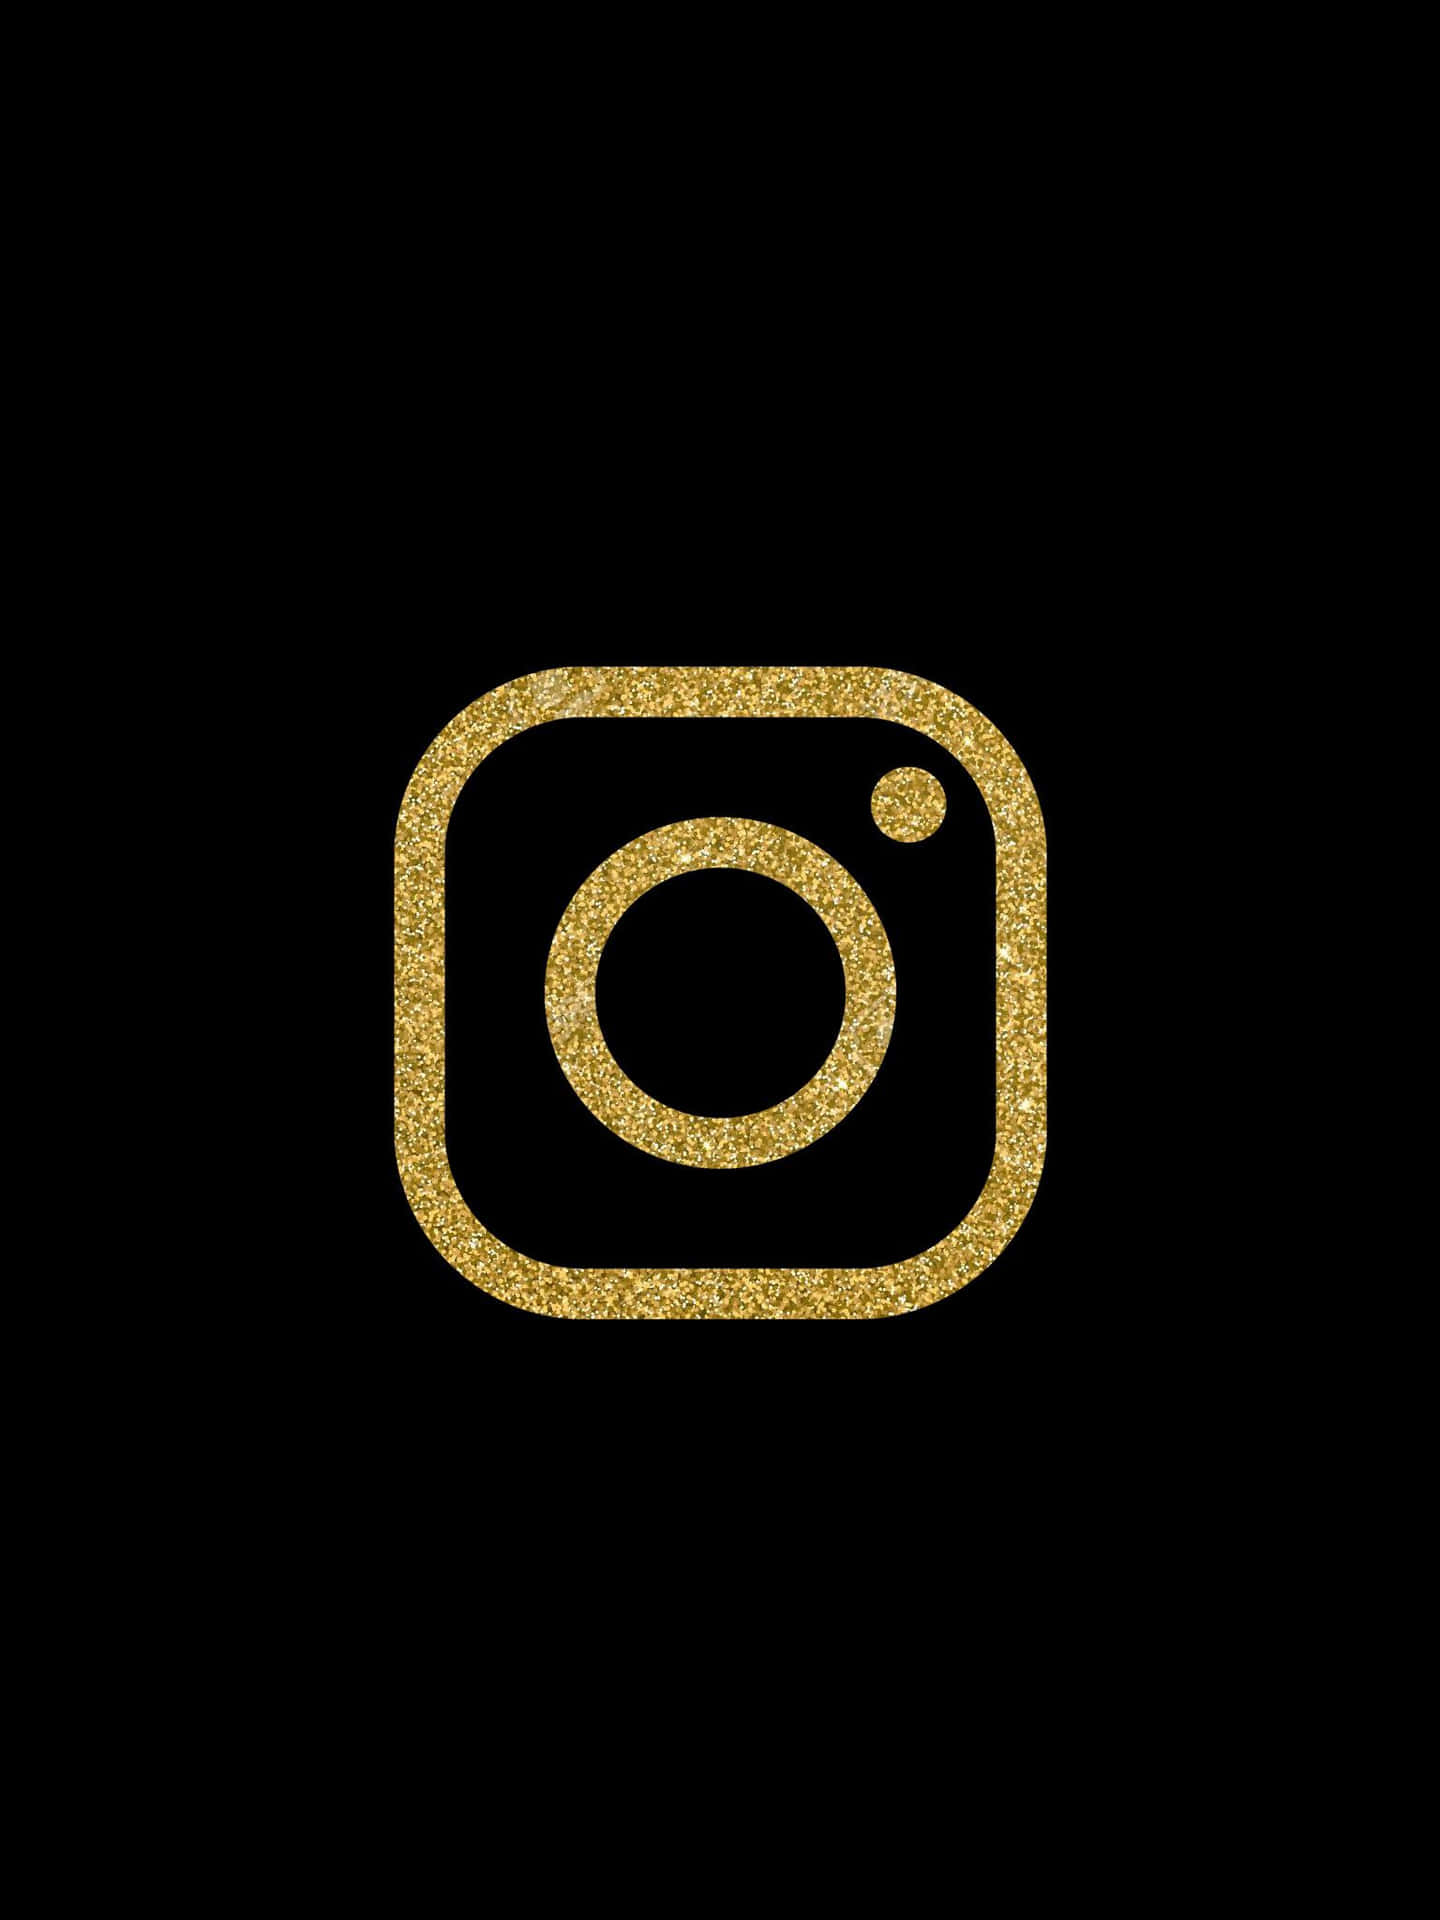 Logotipode Instagram En Oro Con Fondo Negro.